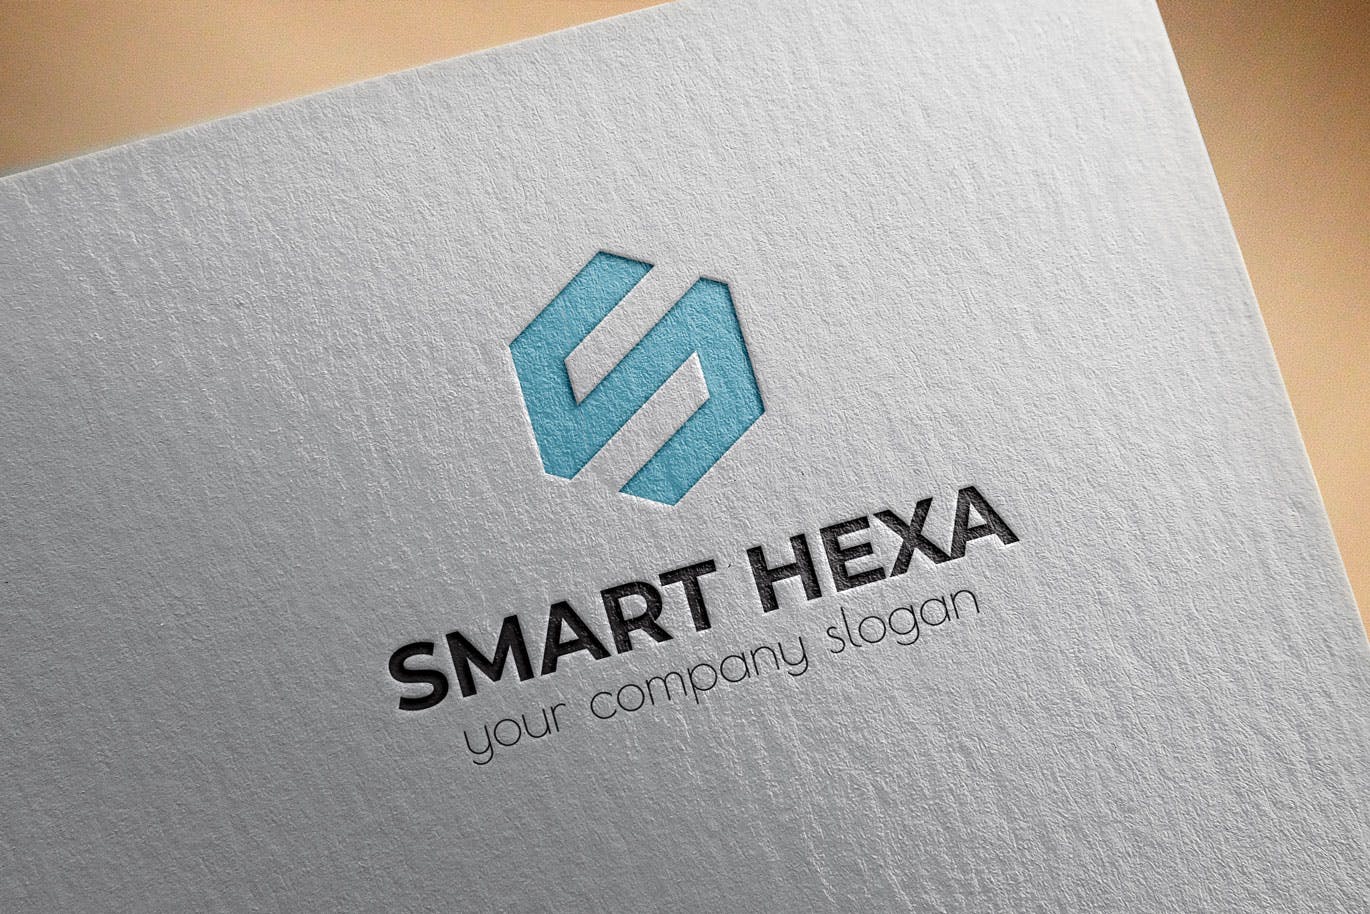 S字母图形Logo设计普贤居精选模板 Smart Hexa Awesome Logo Template插图(2)